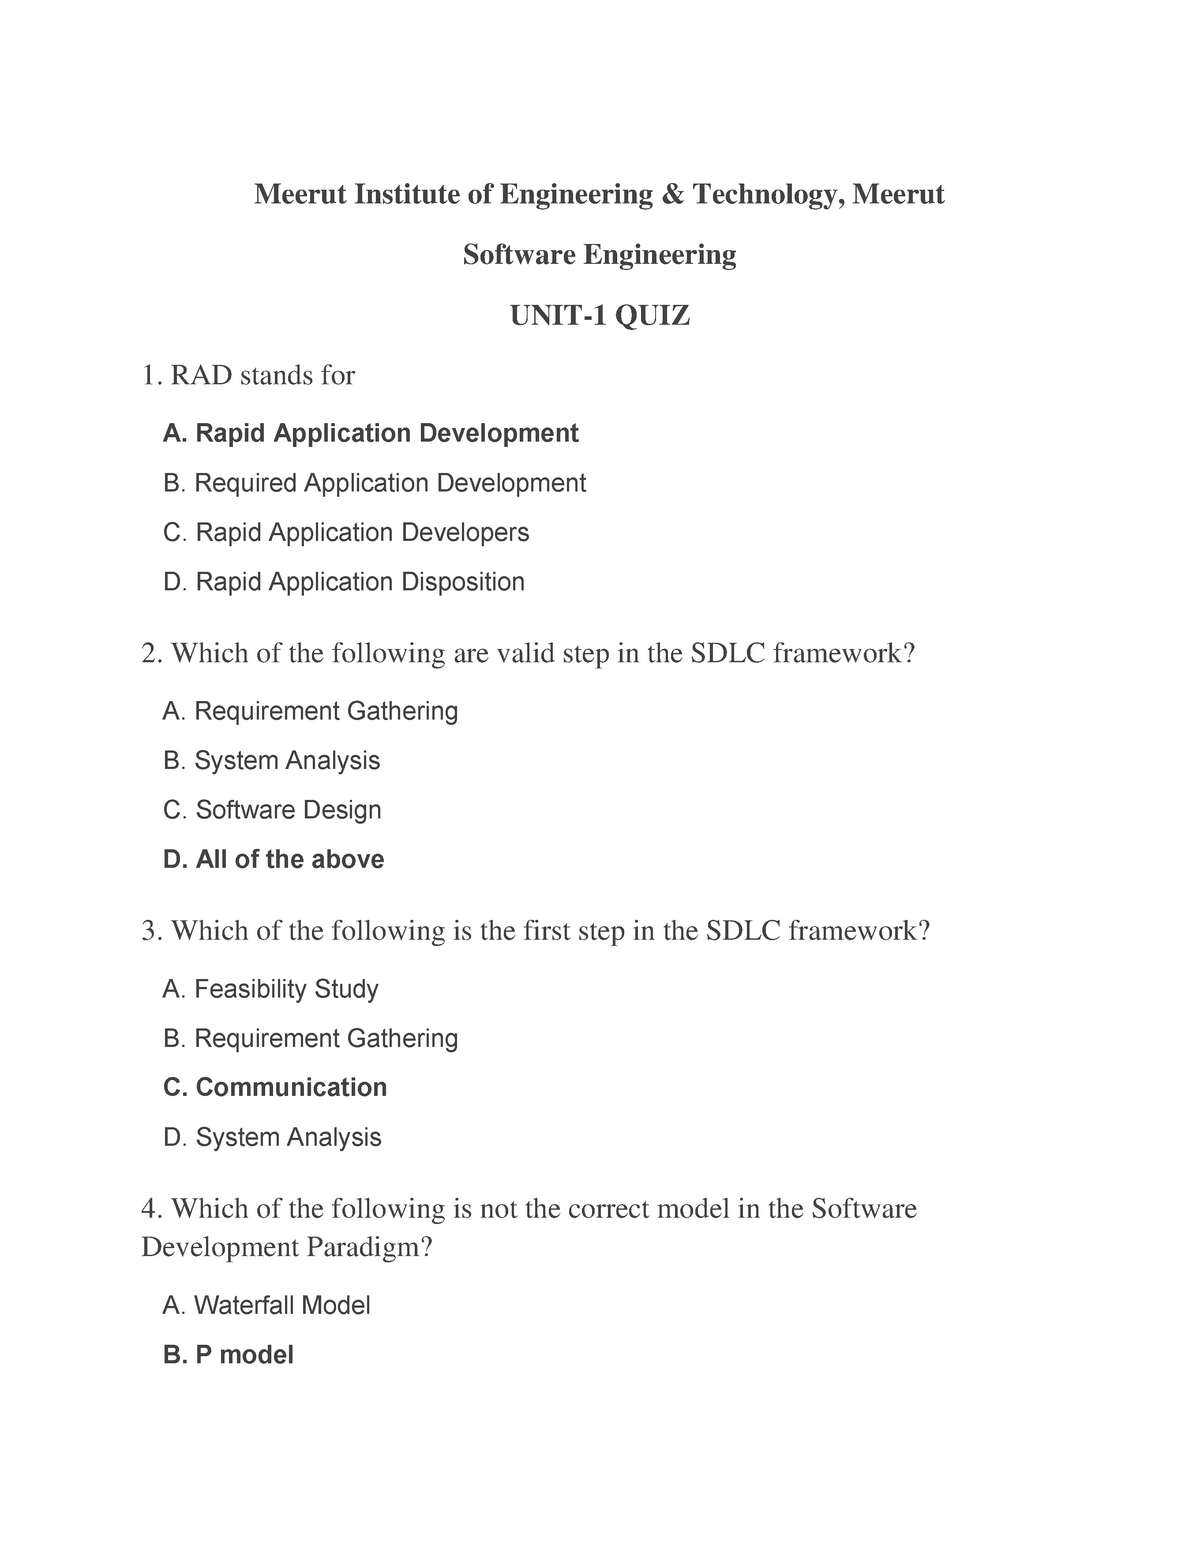 Software Engineering (KCS-601) UNIT 1 MCQ updated - Meerut Institute of Engineering & - Studocu